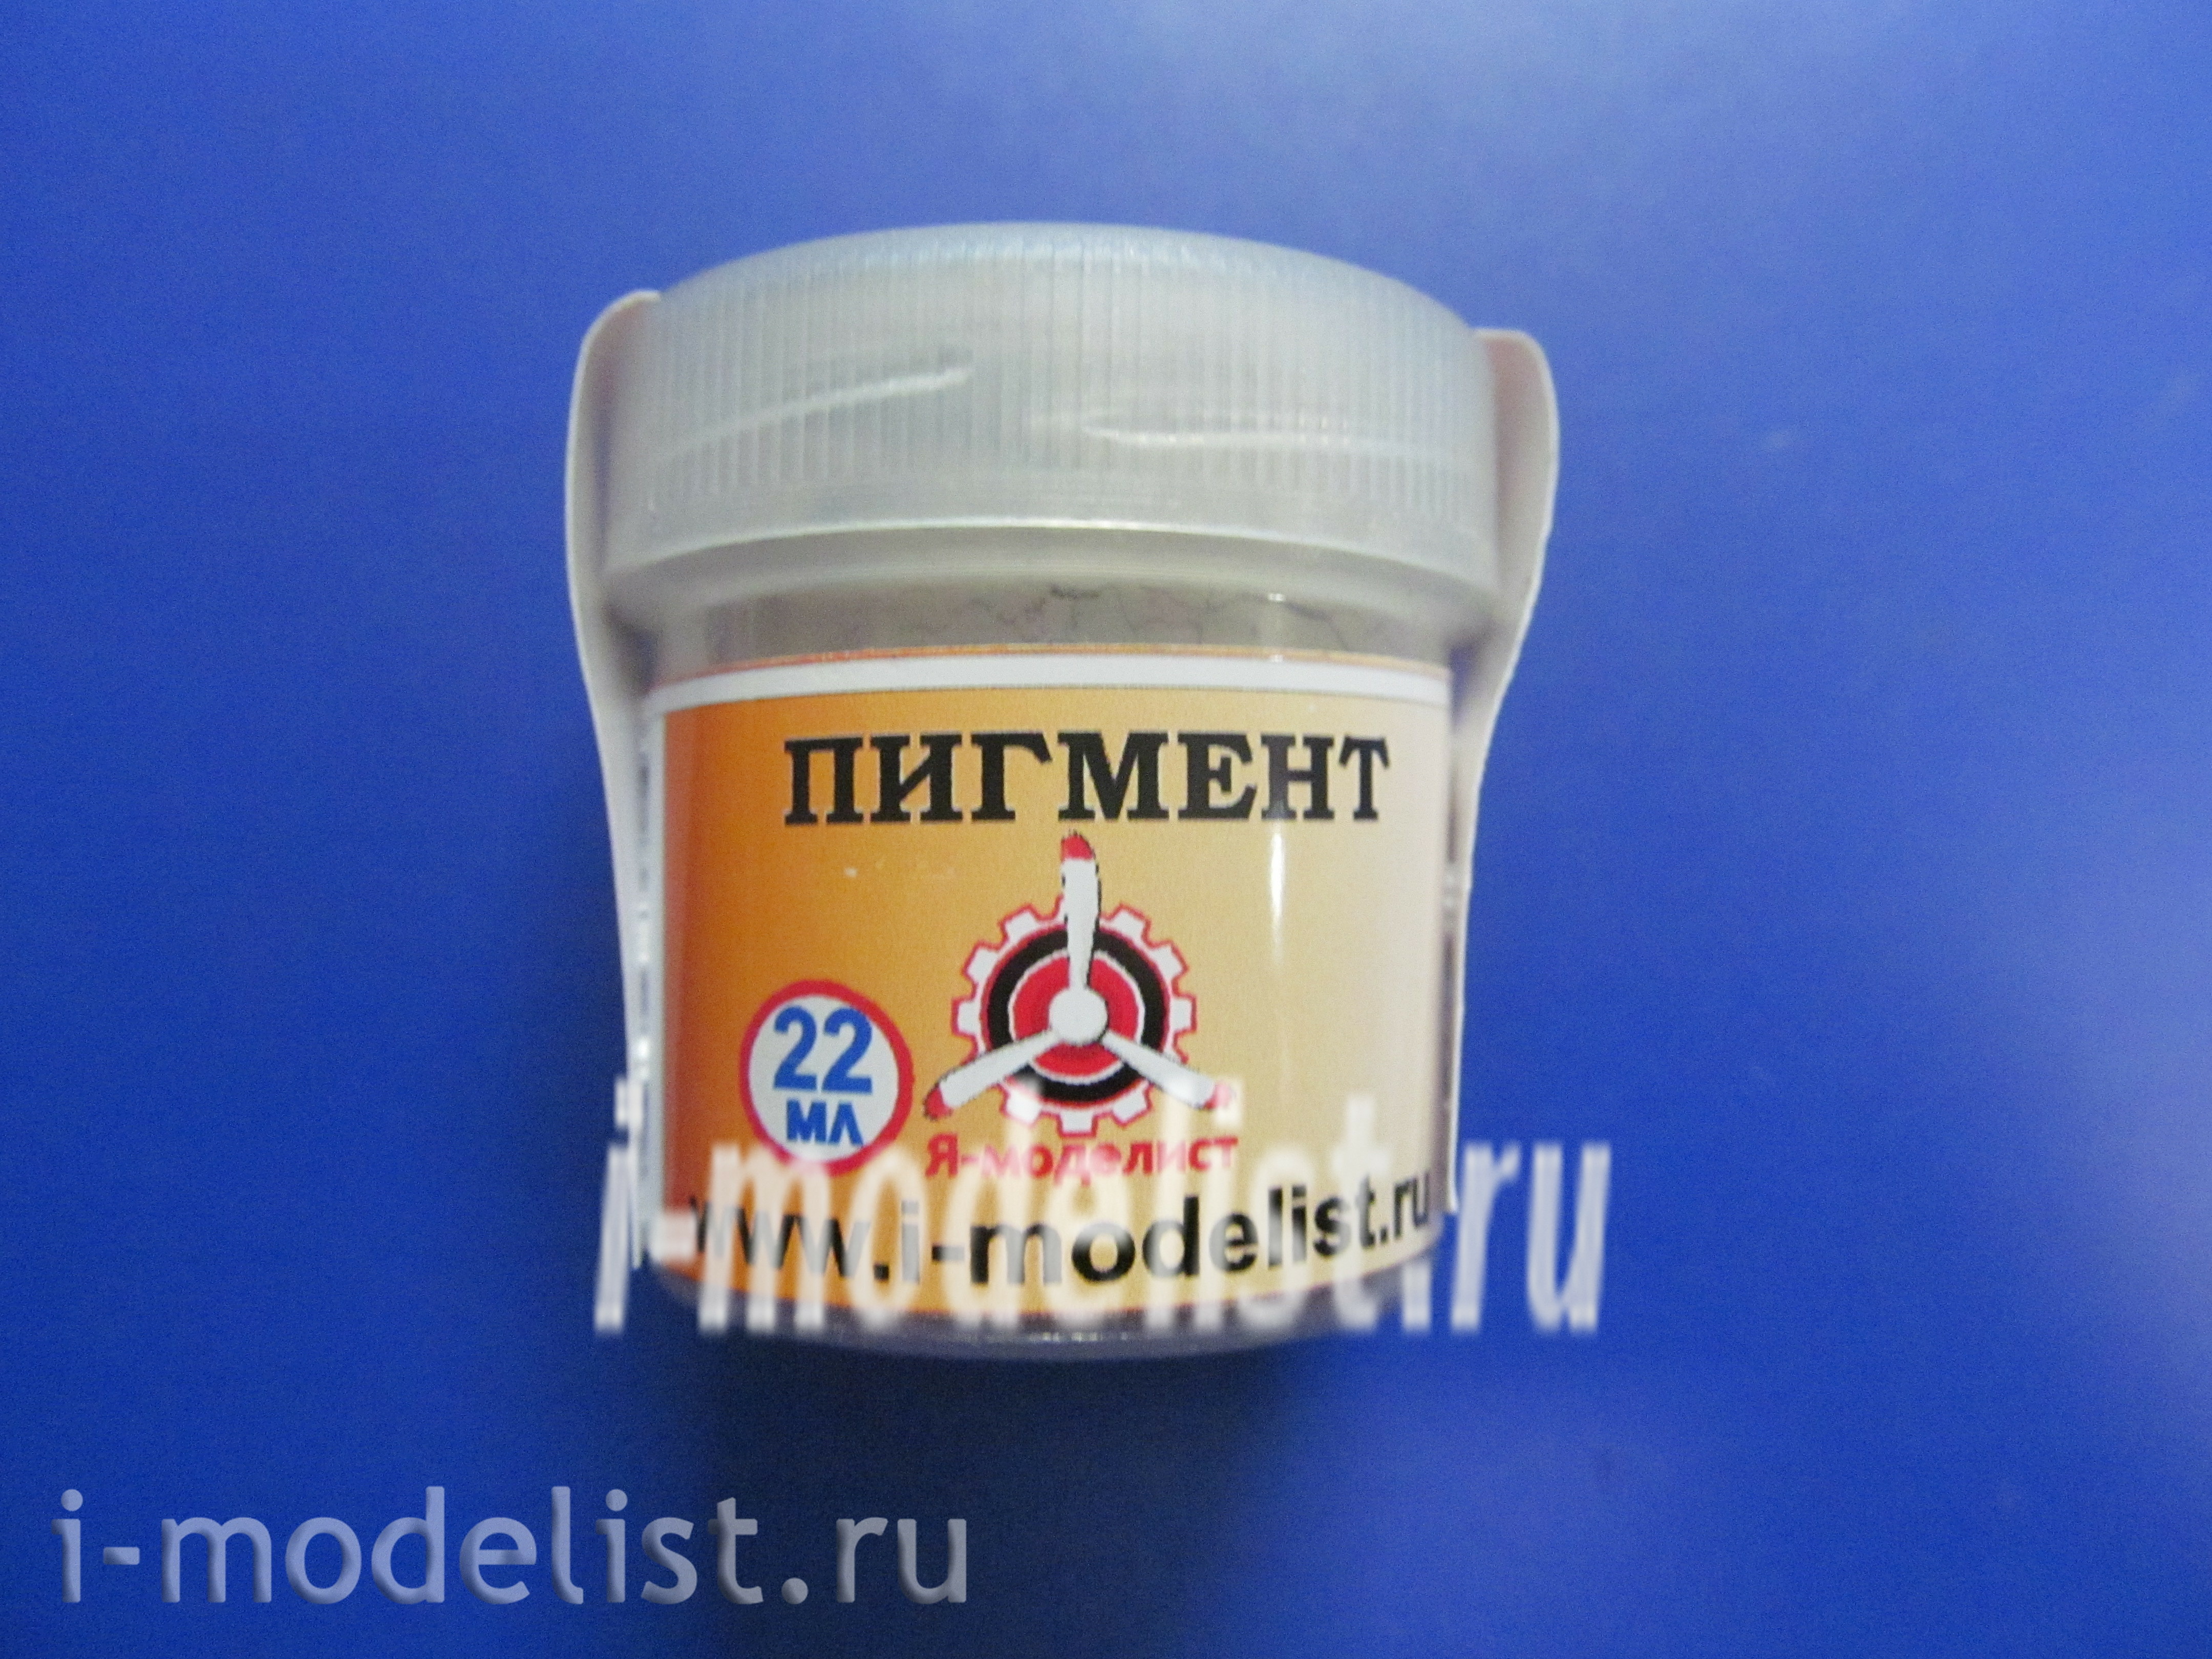 22-48 Imodelist Pigment Dust industrial (Industrial dust)